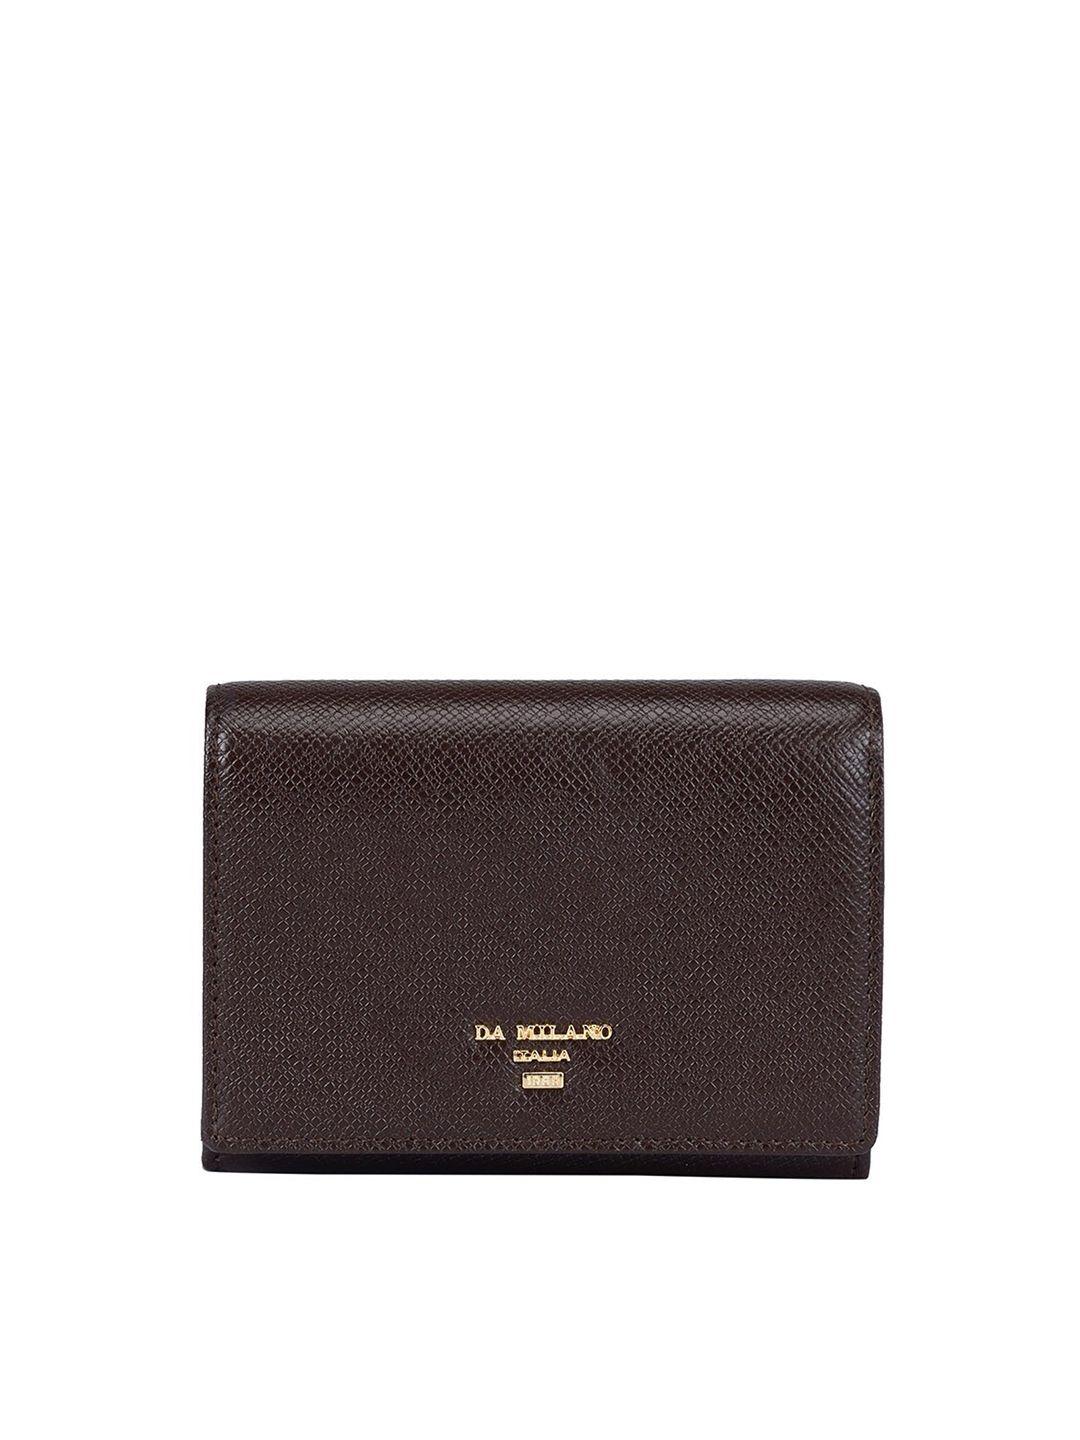 da milano women textured leather two fold wallet